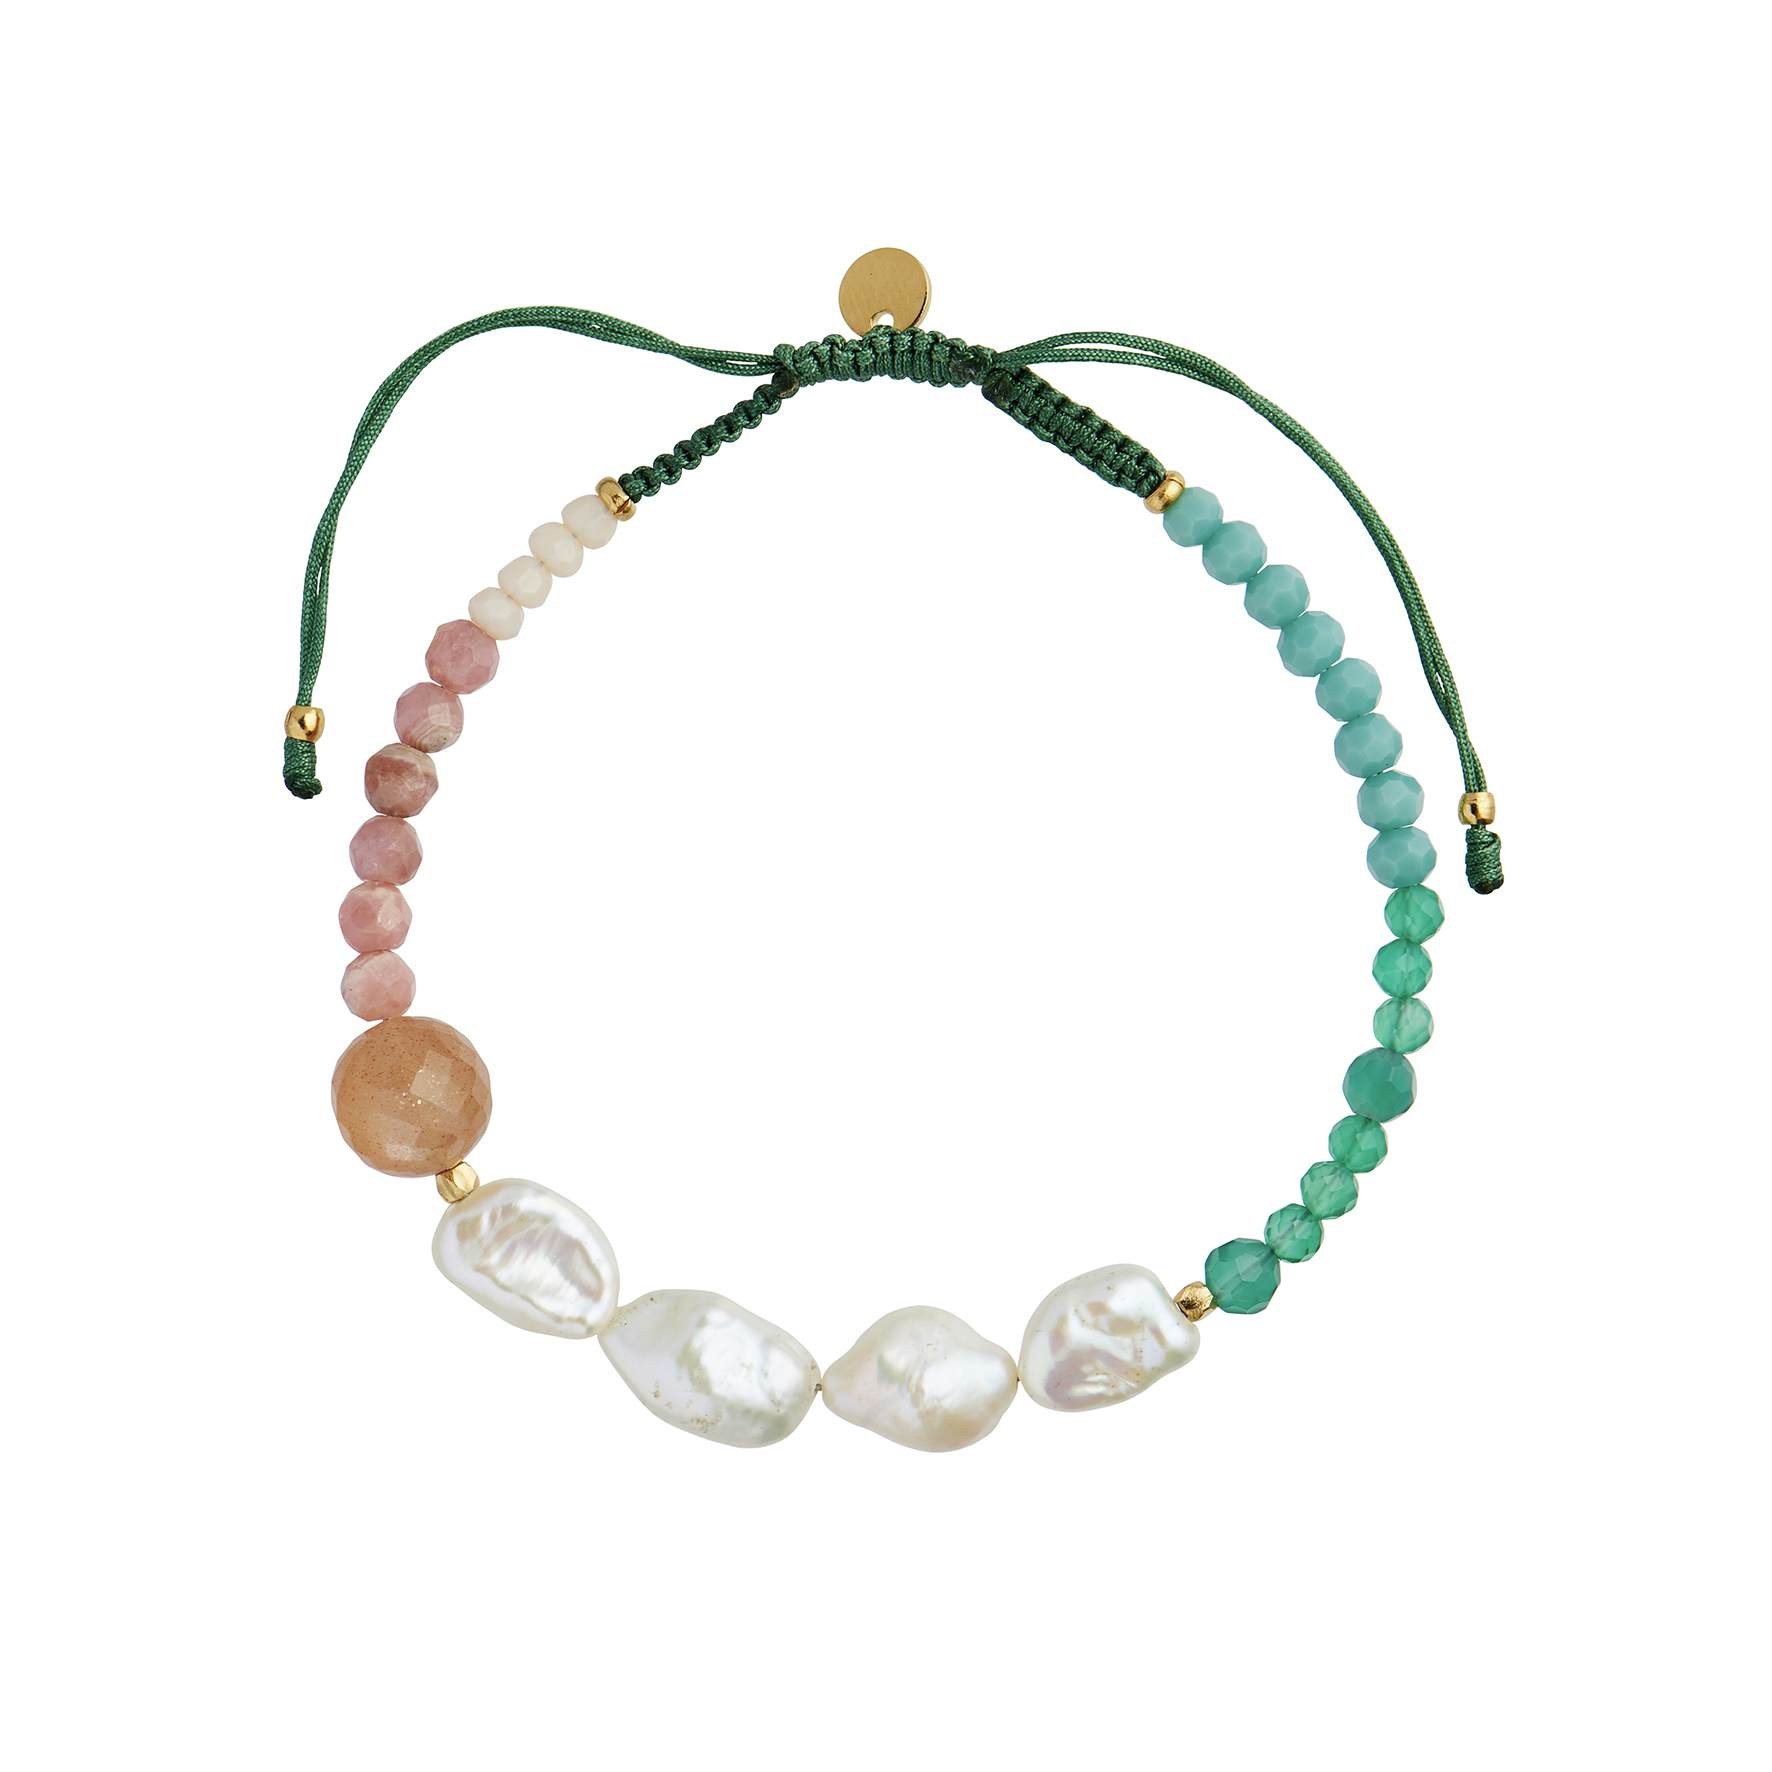 Powder Fall Bracelet With Stones And Pearls Pine Green Ribbon fra STINE A Jewelry i Nylon